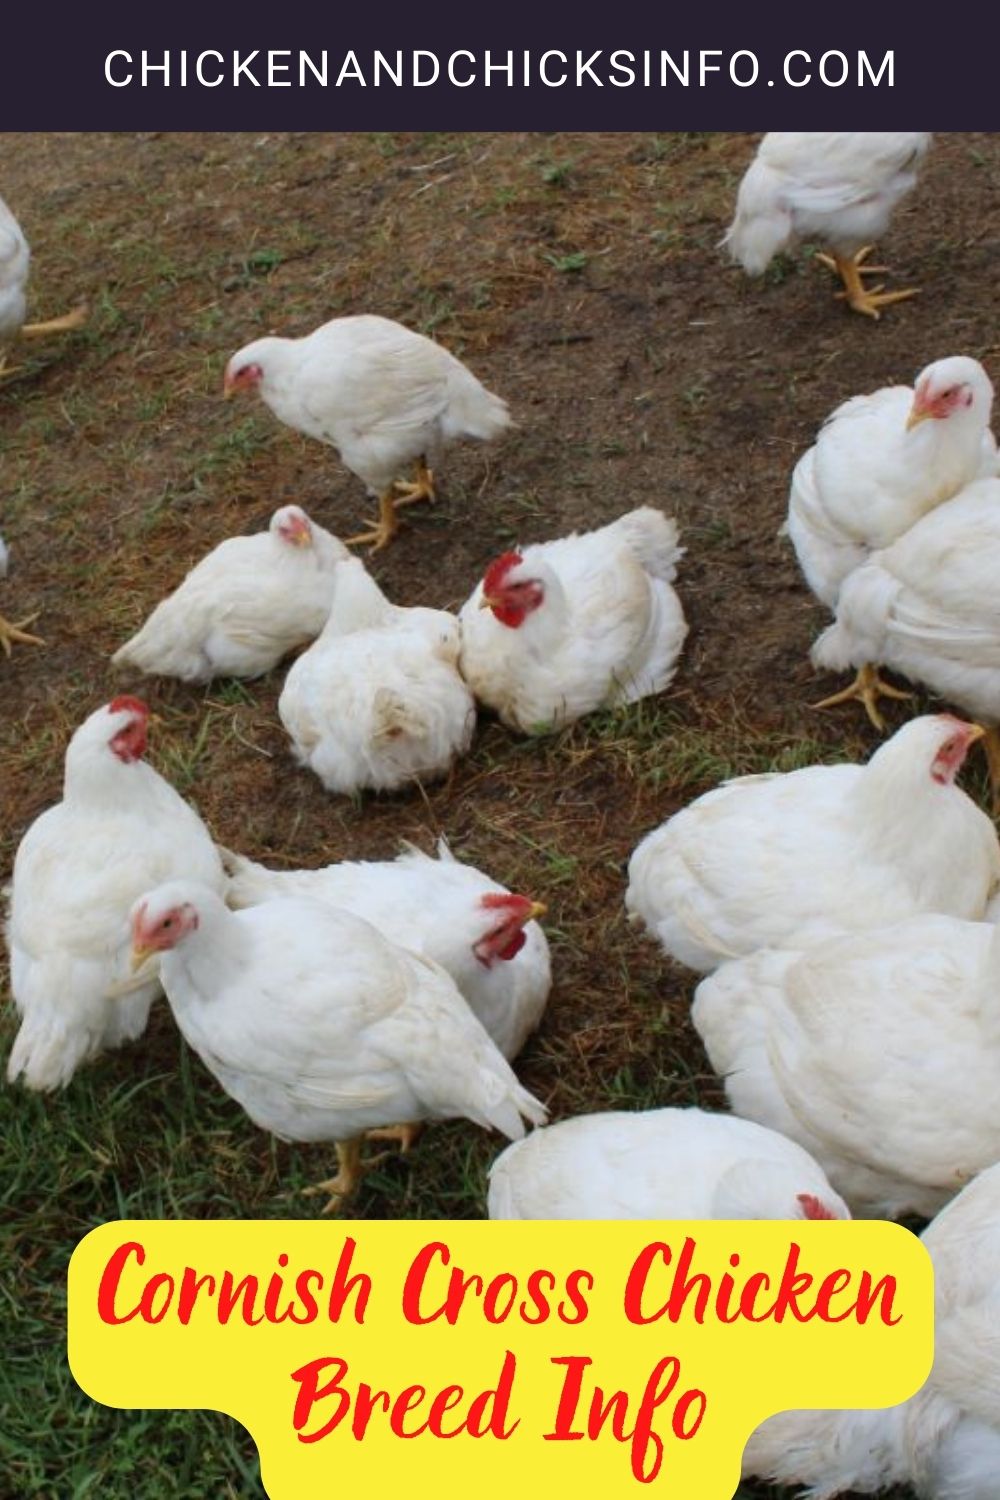 Cornish Cross Chicken Breed Info pinterest image.